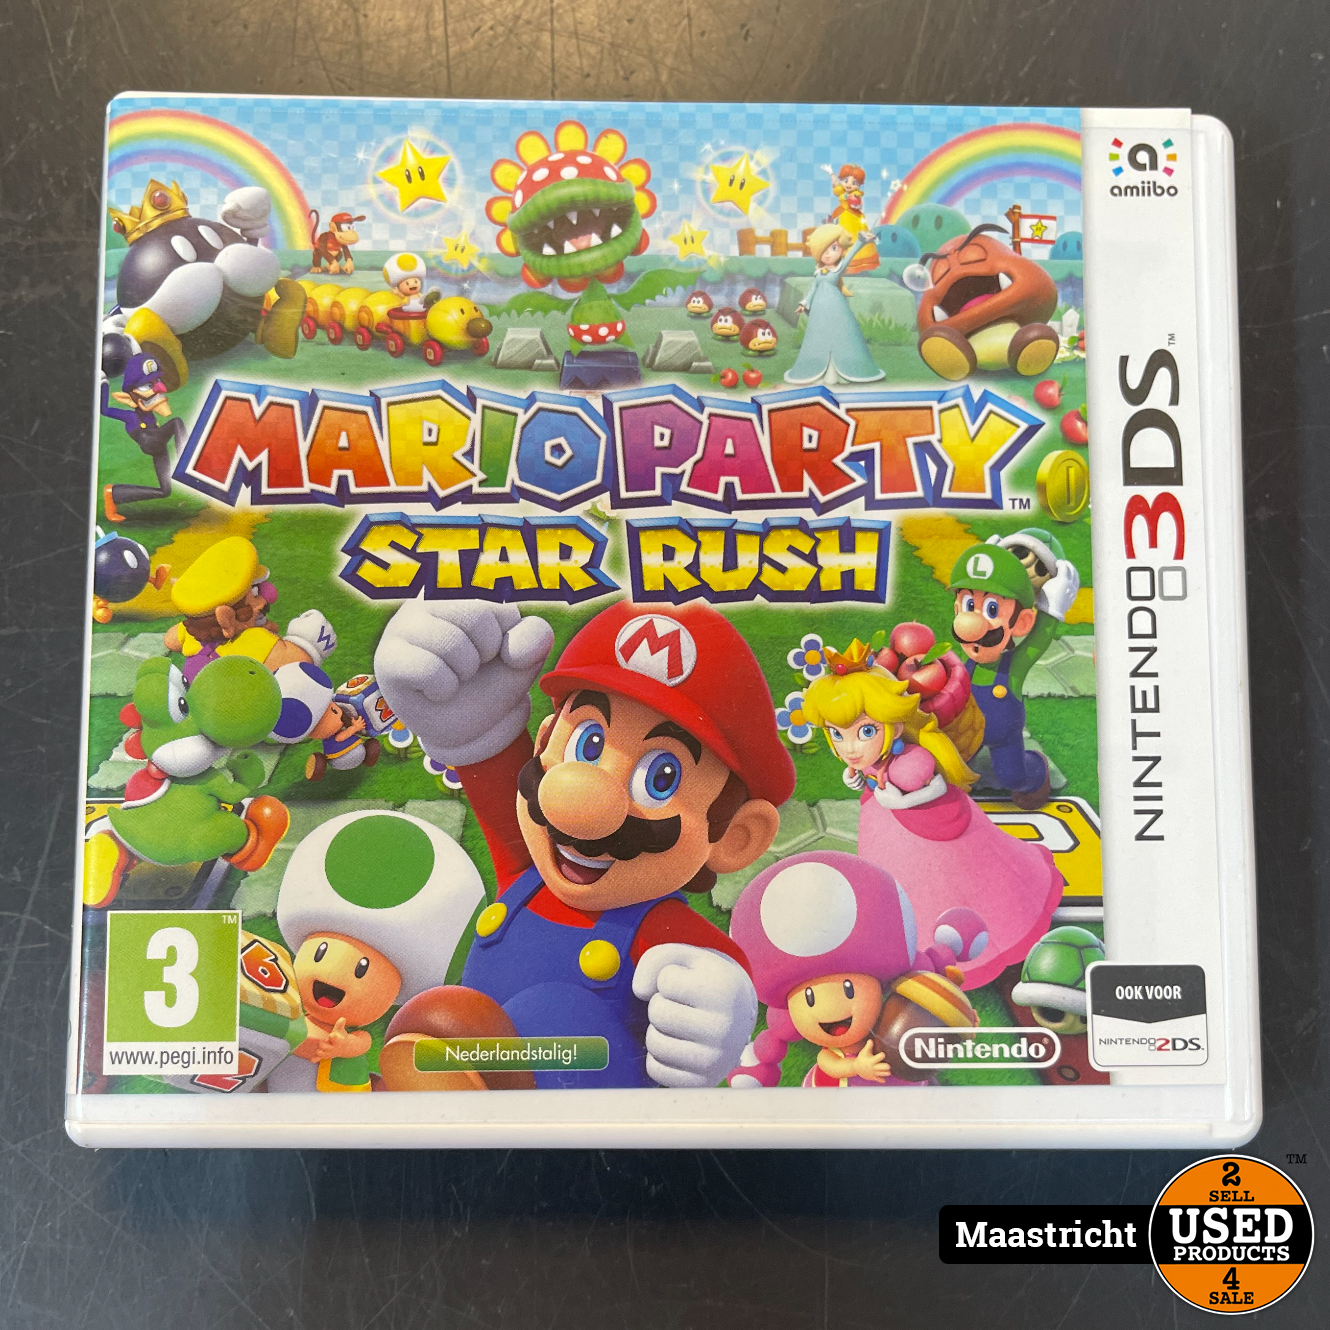 Meyella bevestigen mouw Nintendo 3DS - Mario Party Star Rush - Used Products Maastricht